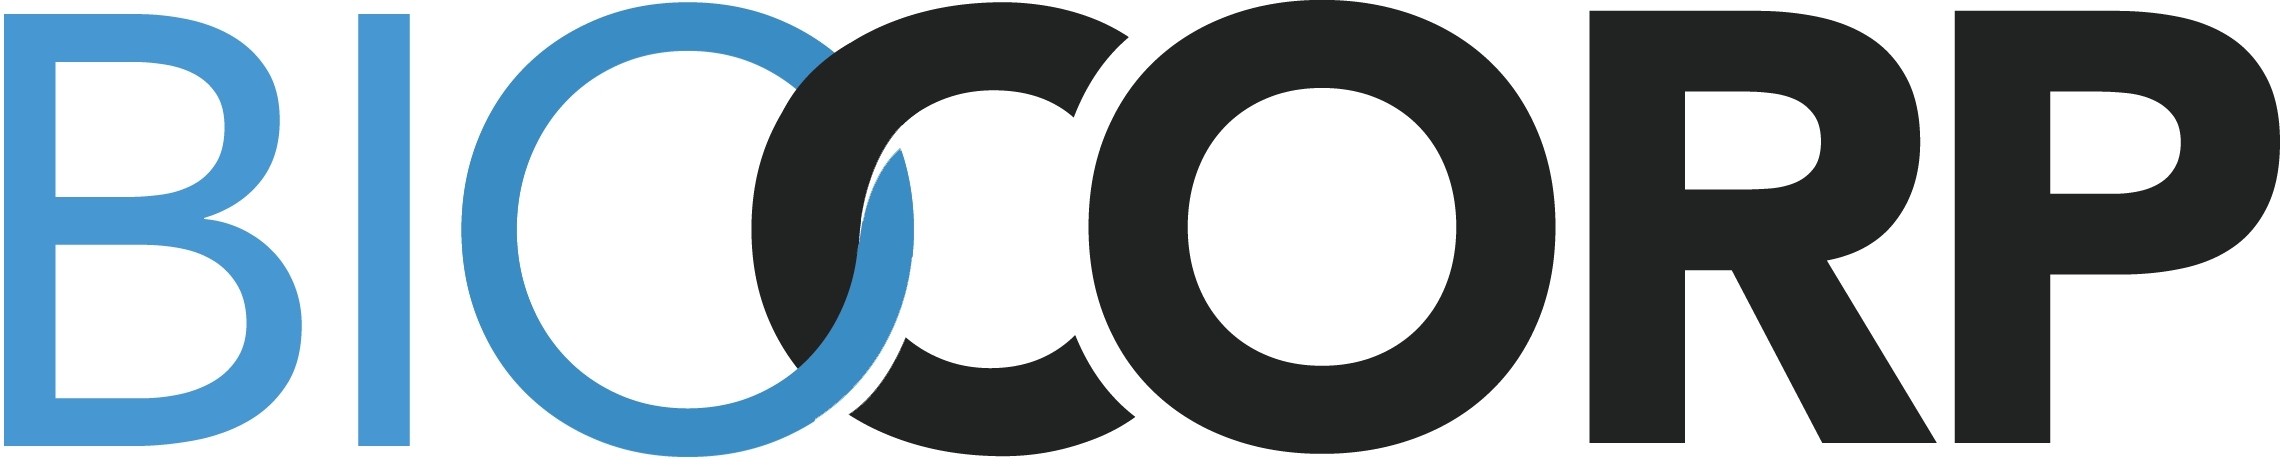 https://mms.businesswire.com/media/20191211005828/en/639213/5/Logo_Biocorp.jpg 